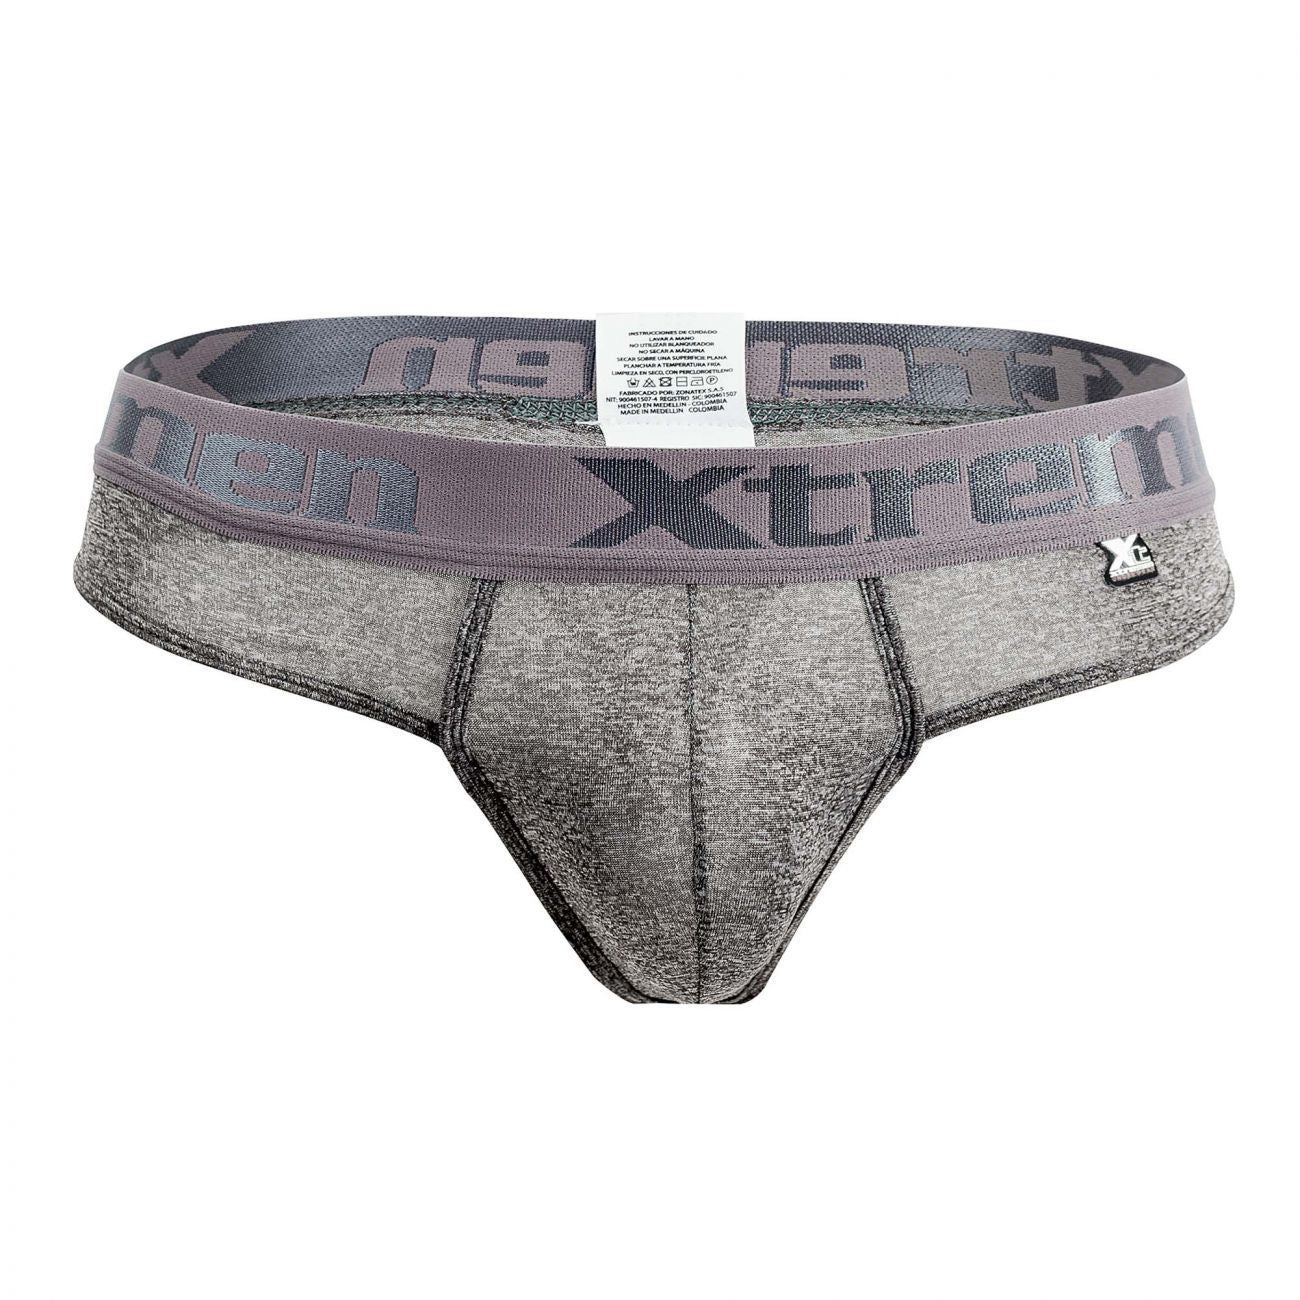 Xtremen 91031-3 3PK Piping Thongs Jasper Gray